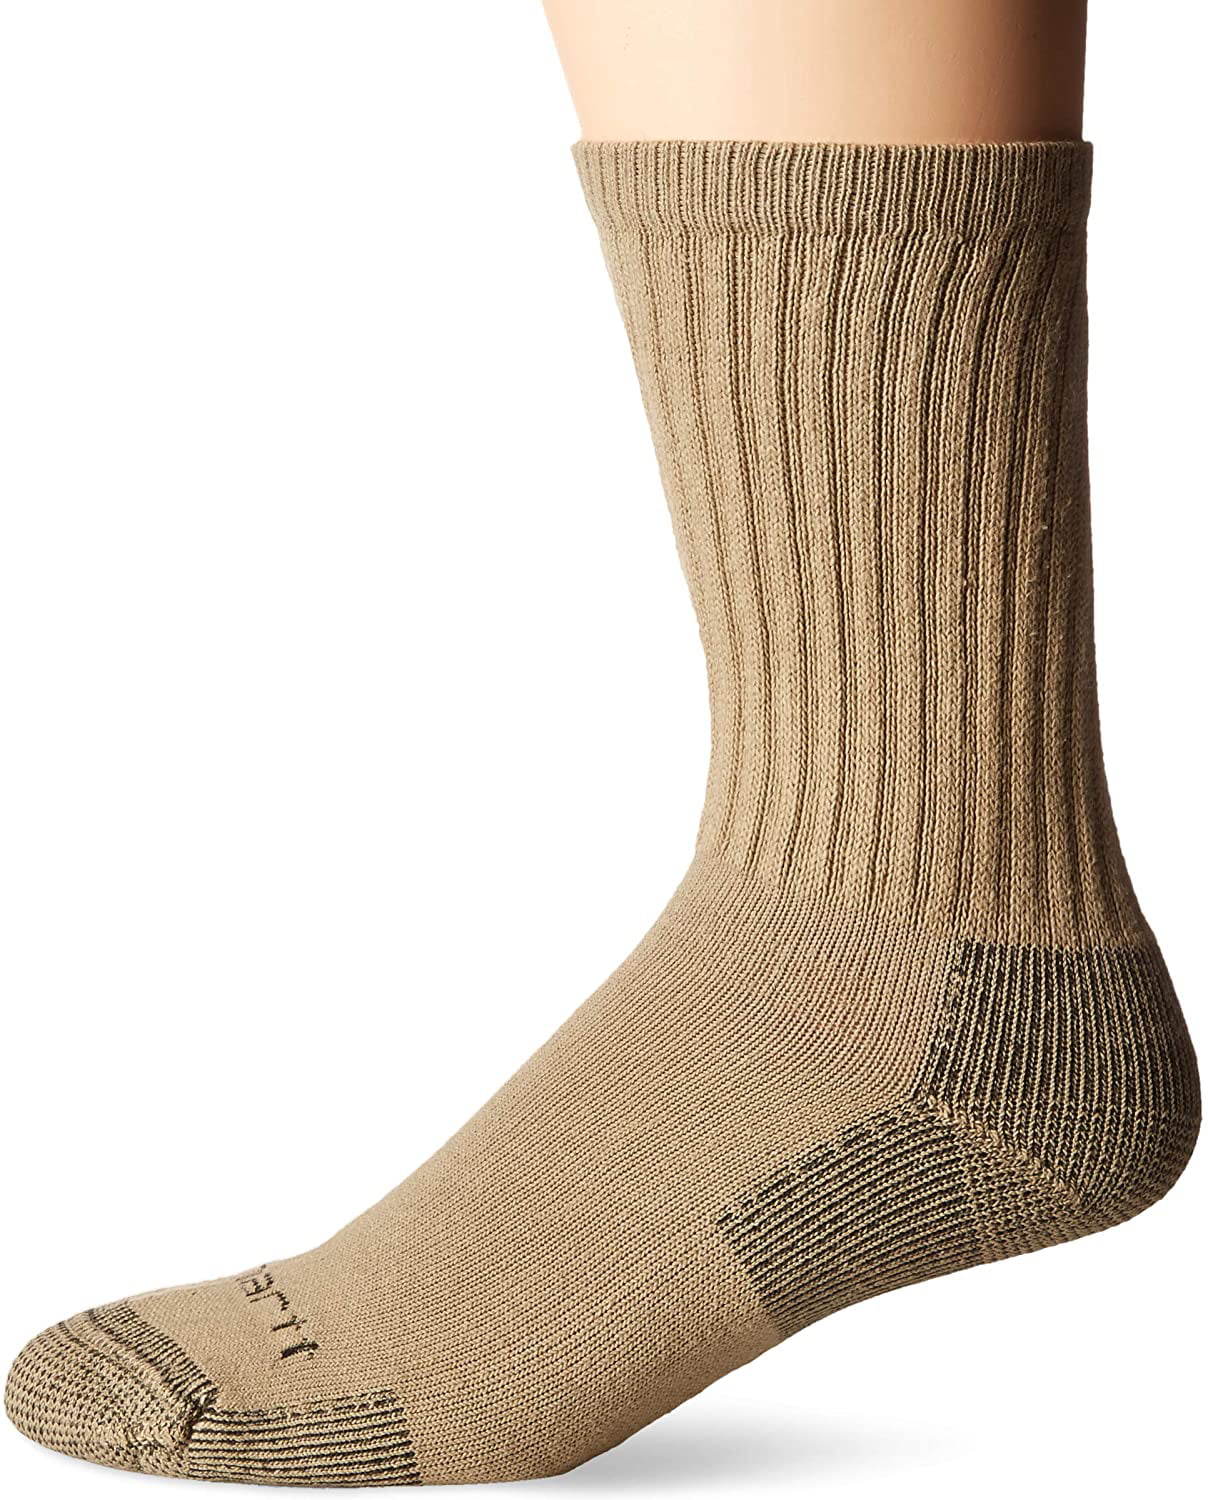 Carhartt Men 179102 All-season Cotton Crew Work Socks White Size L for sale online 